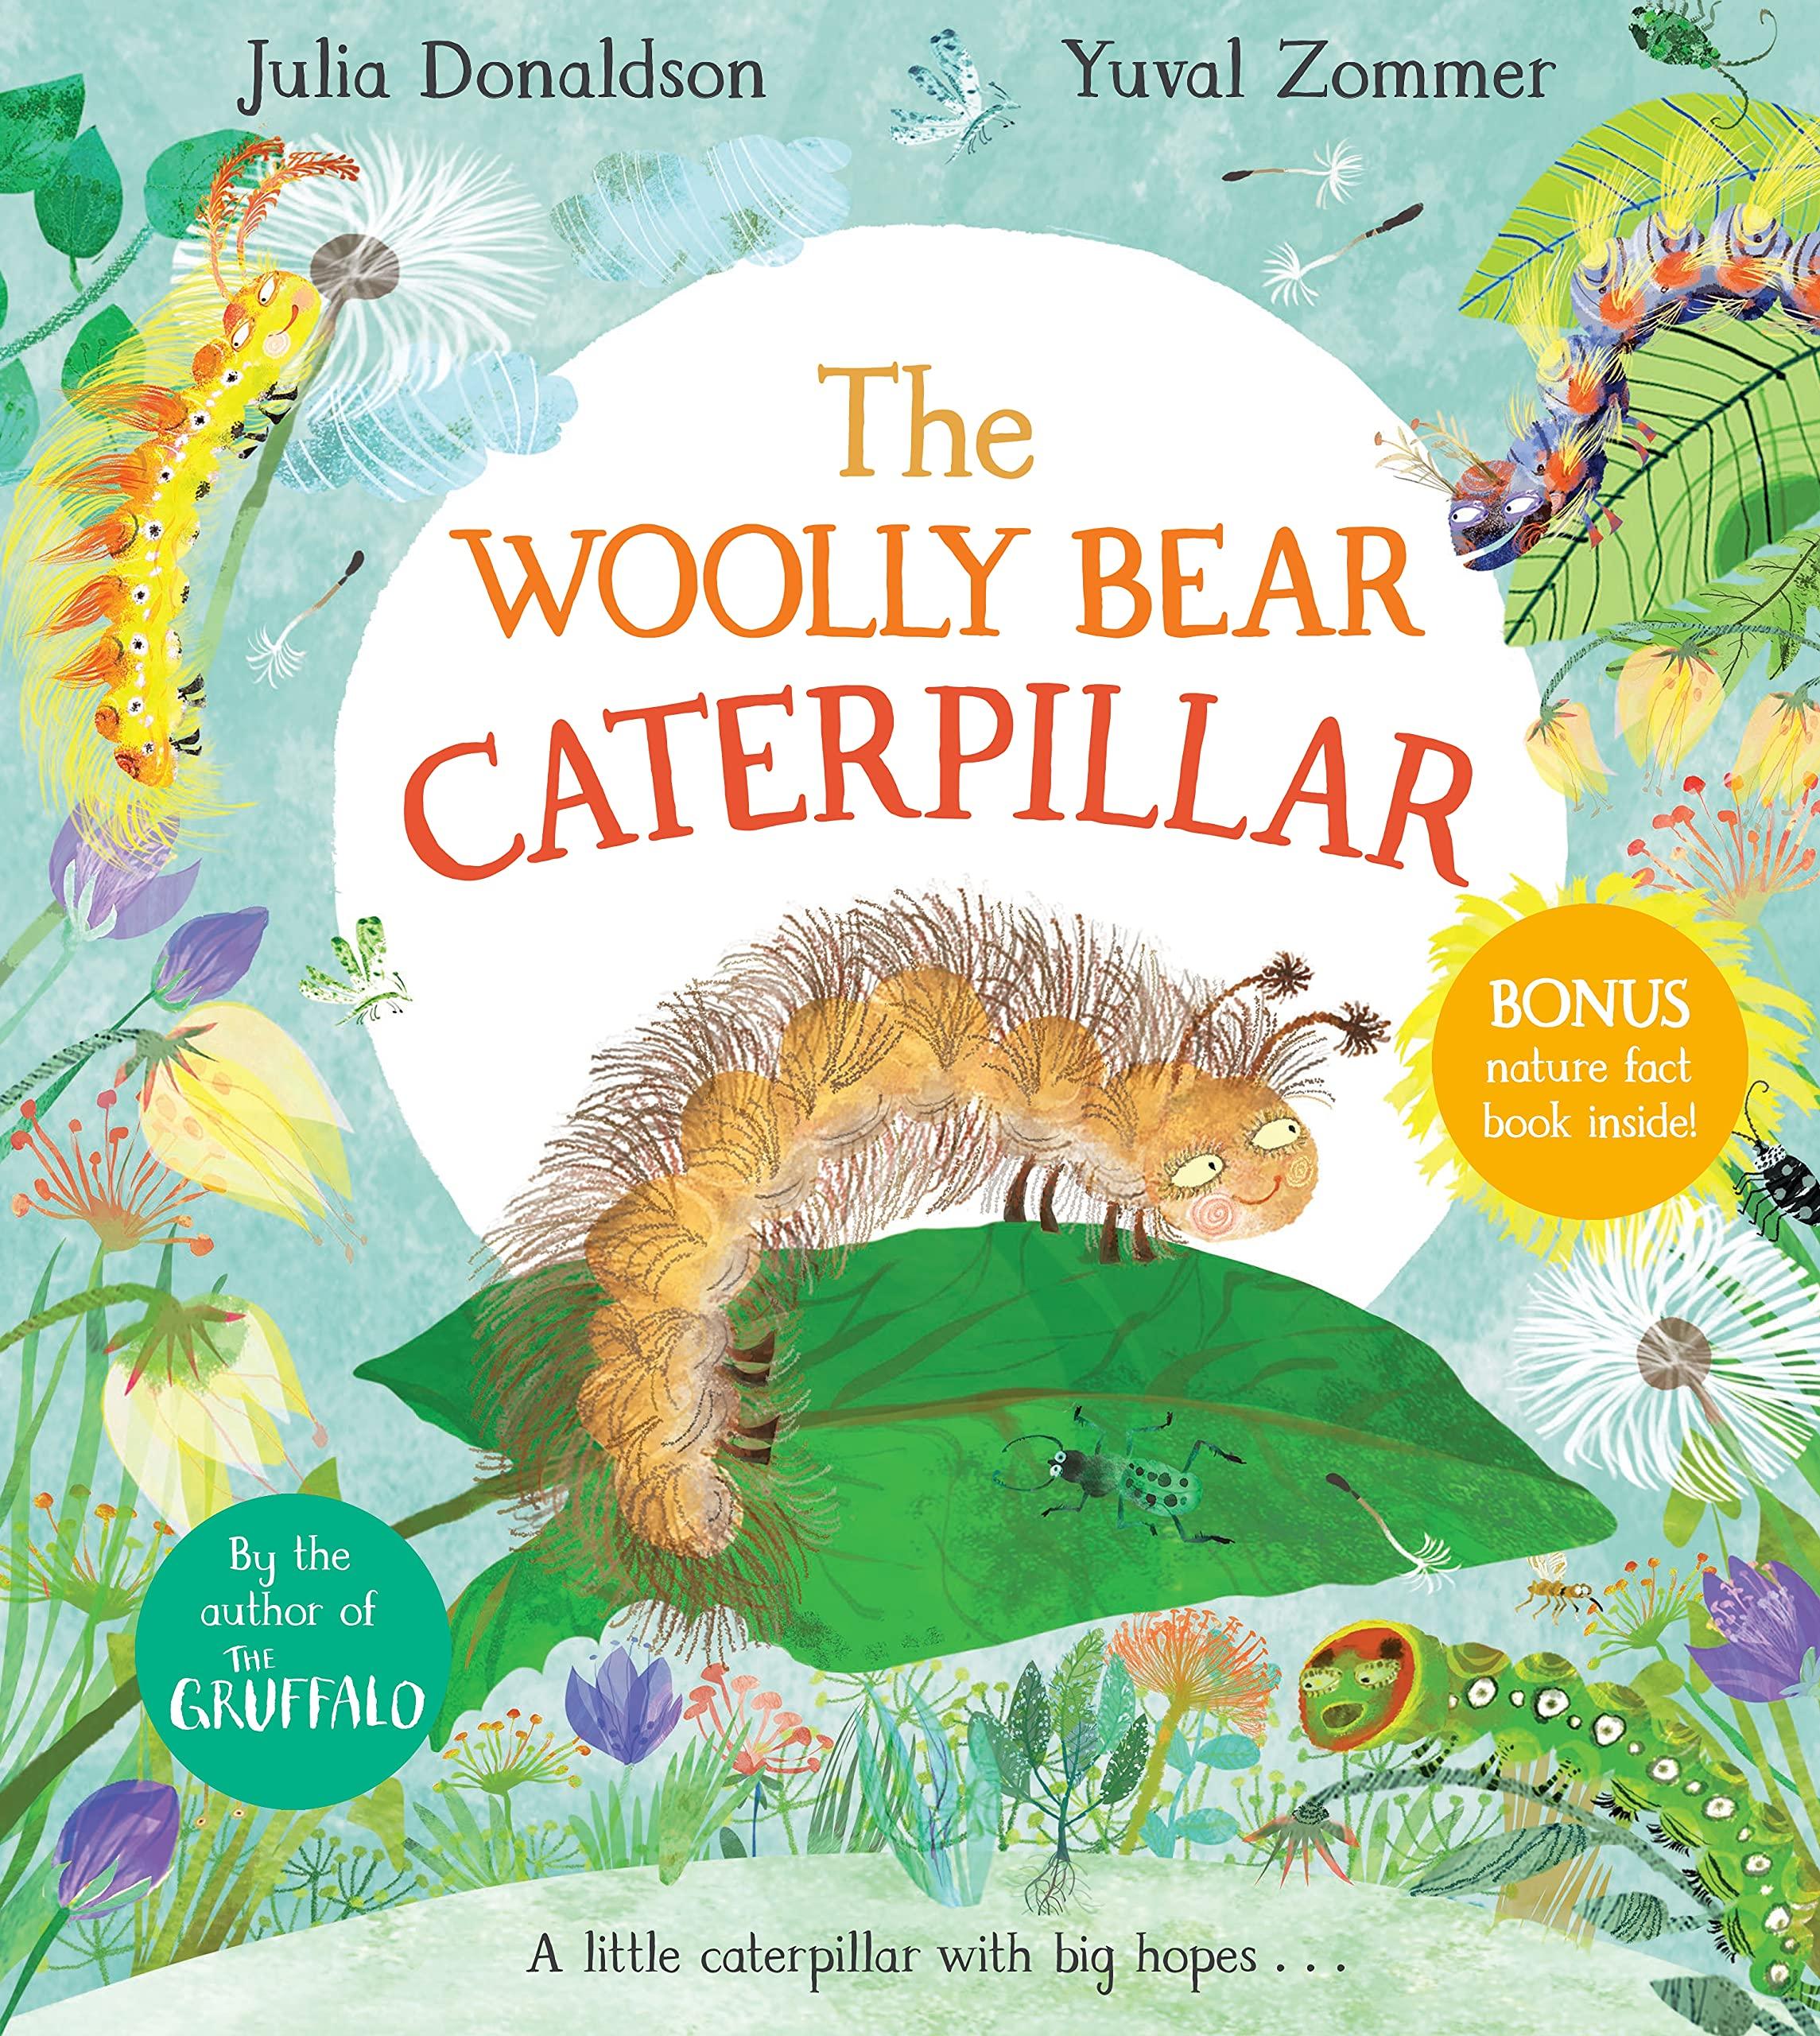 Handout image shows book Julia Donaldson’s The Woolly Bear Caterpillar.jpeg